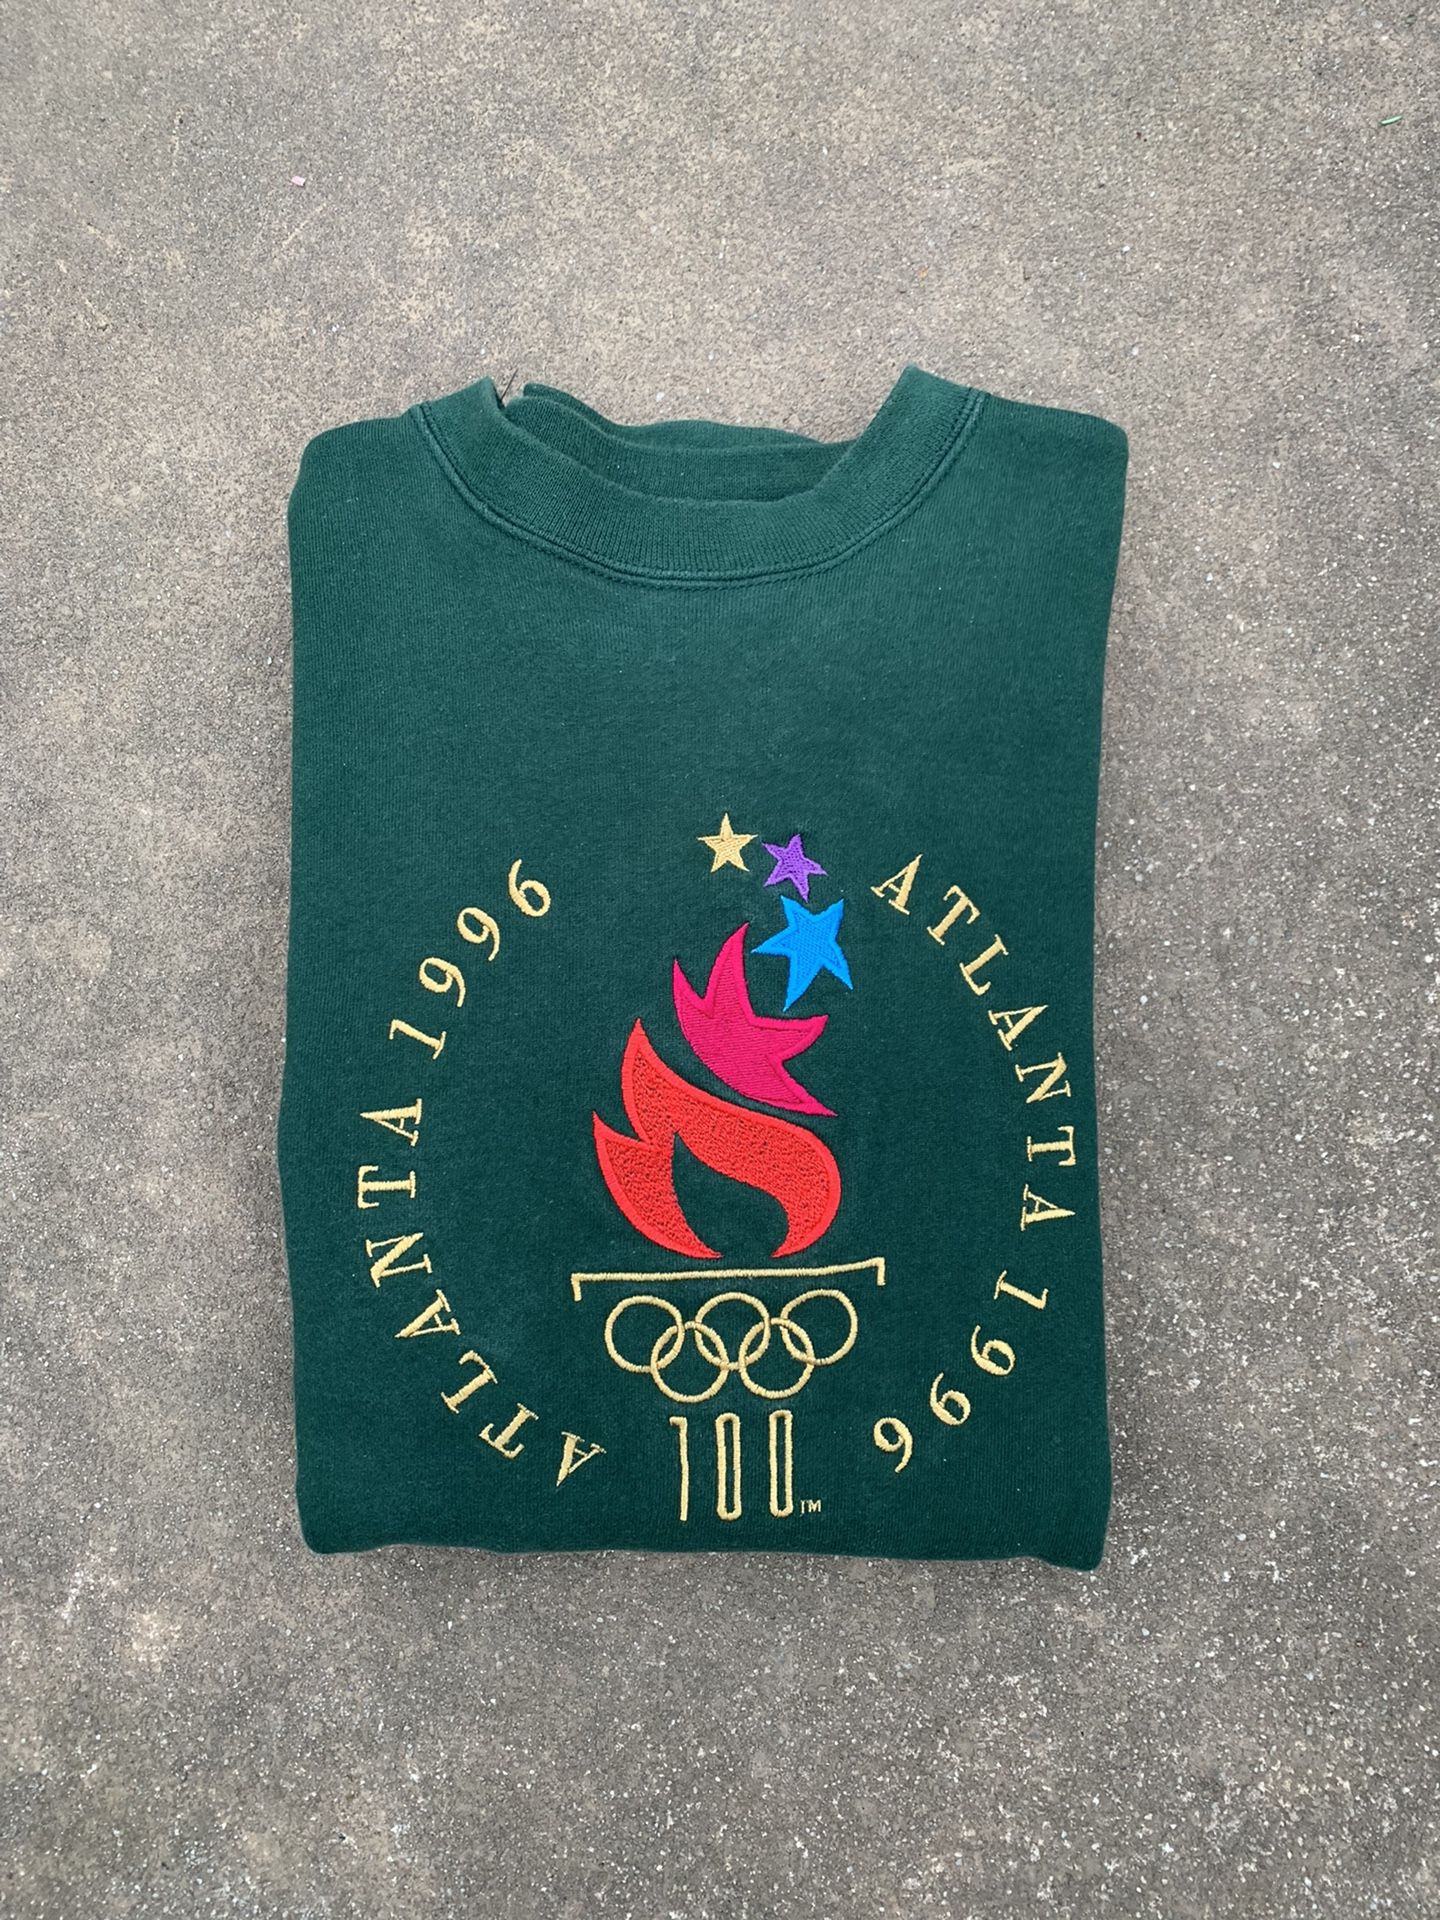 Vintage 1996 Atlanta Olympics LogoAthletic Sweatshirt